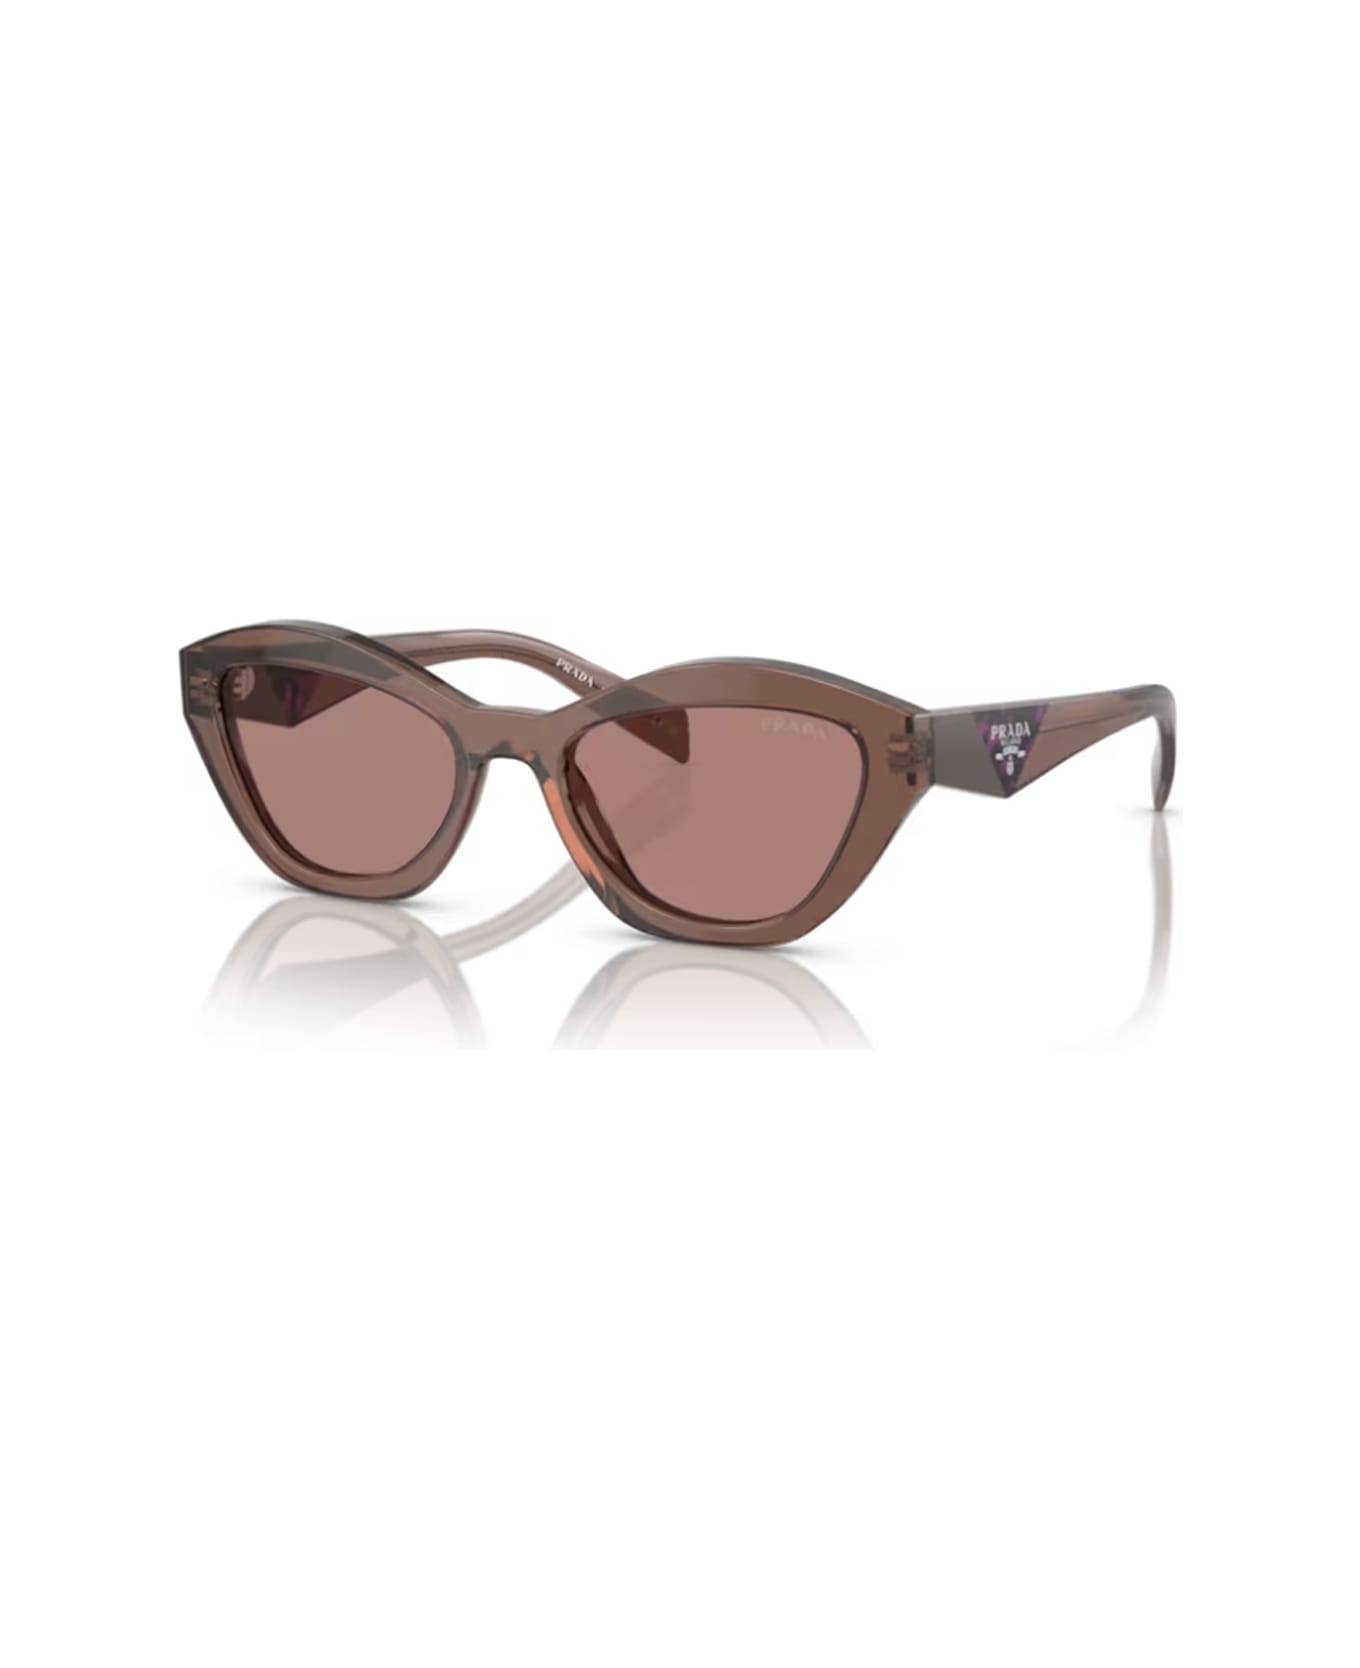 Prada Eyewear Pra02s 17o60b Sunglasses - Marrone